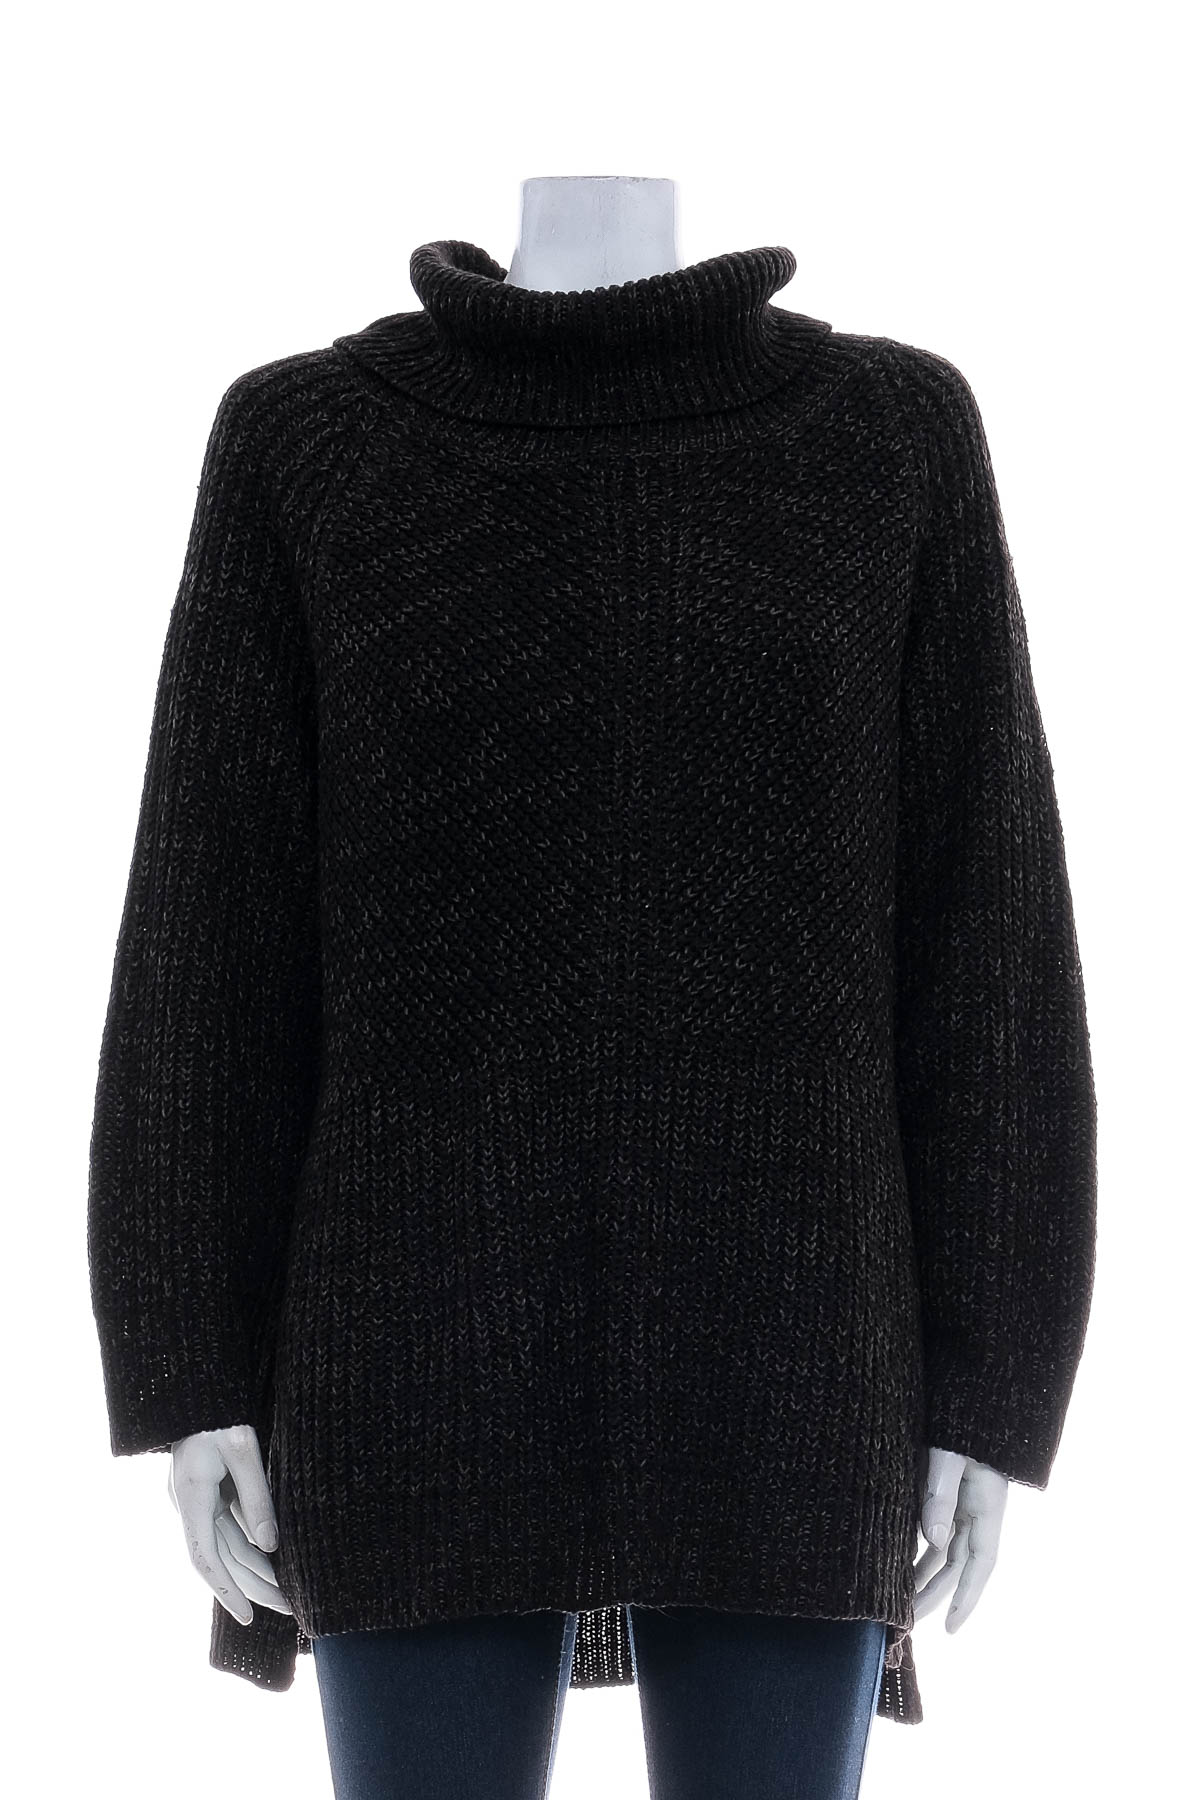 Women's sweater - Rick Cardona - 0